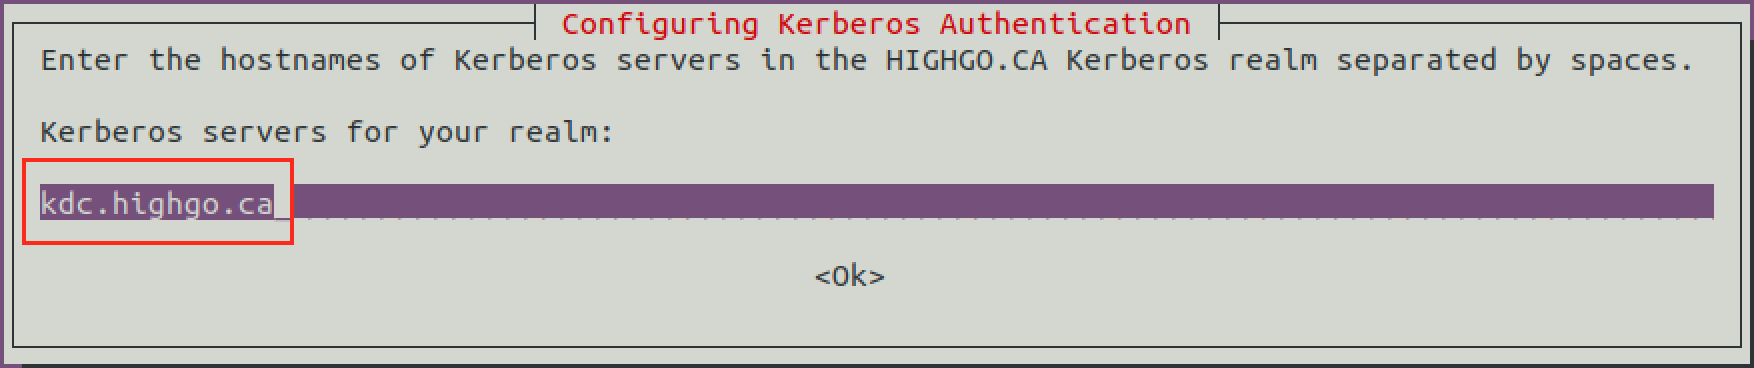 Kerberos Server